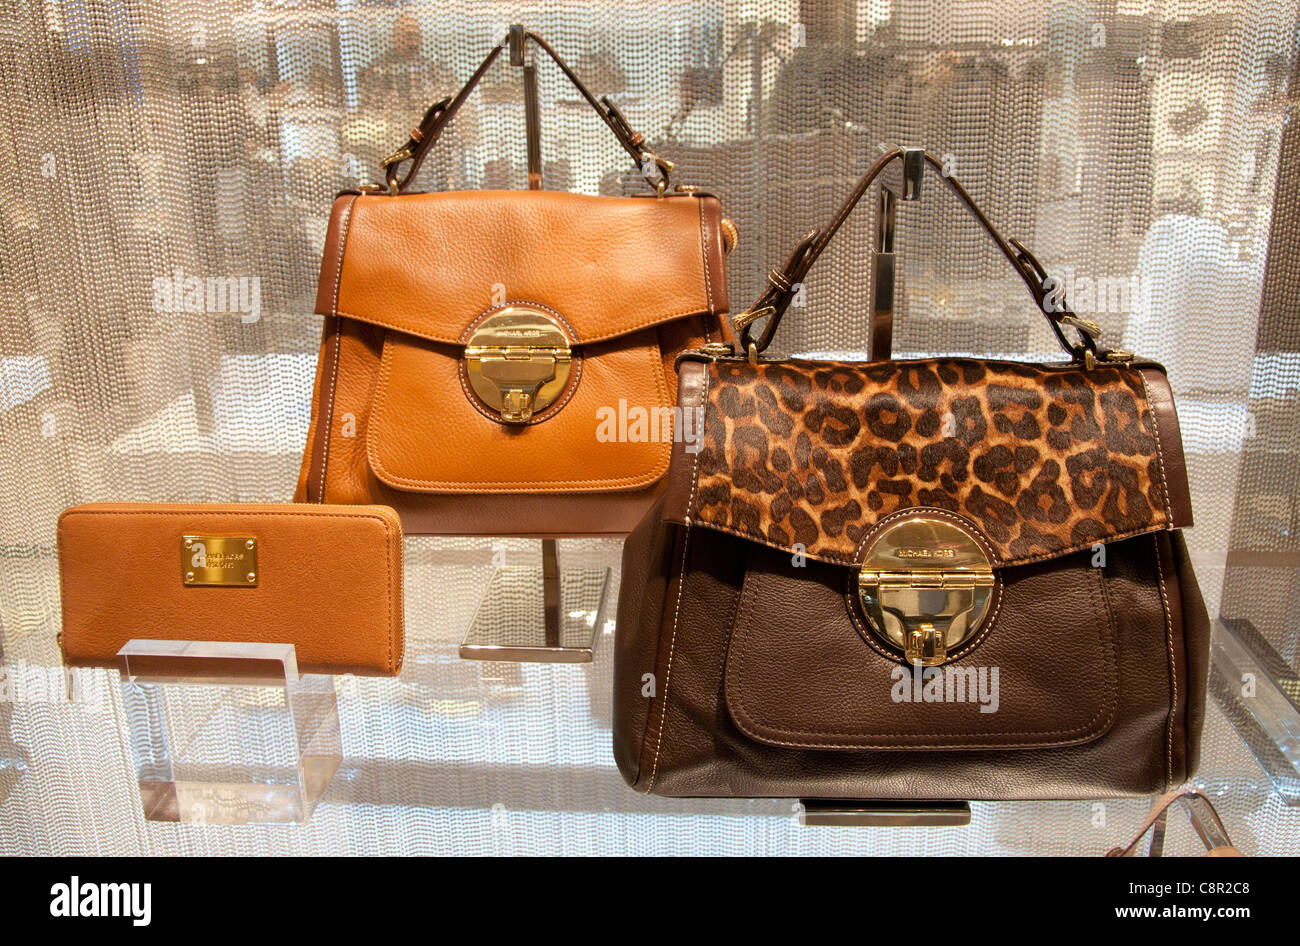 Bag Bags Michael Kors New York shop display window United states of America Stock Photo